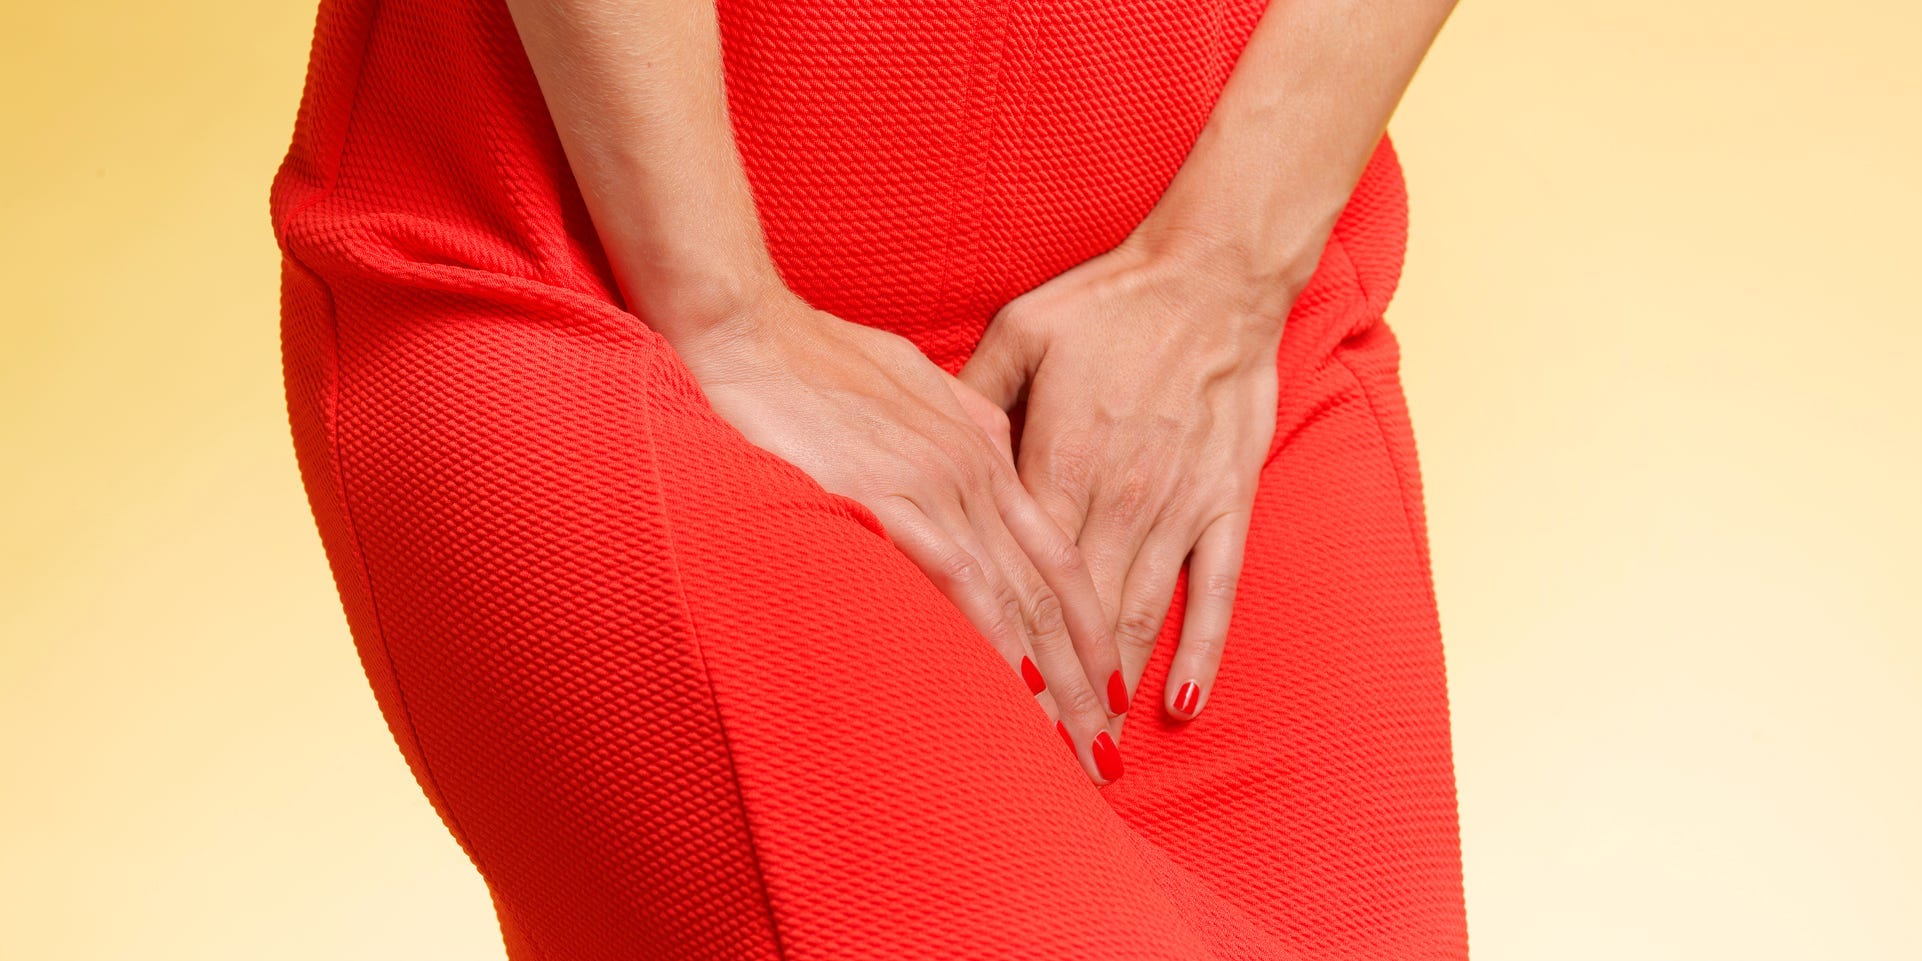 woman clutching bladder or vagina